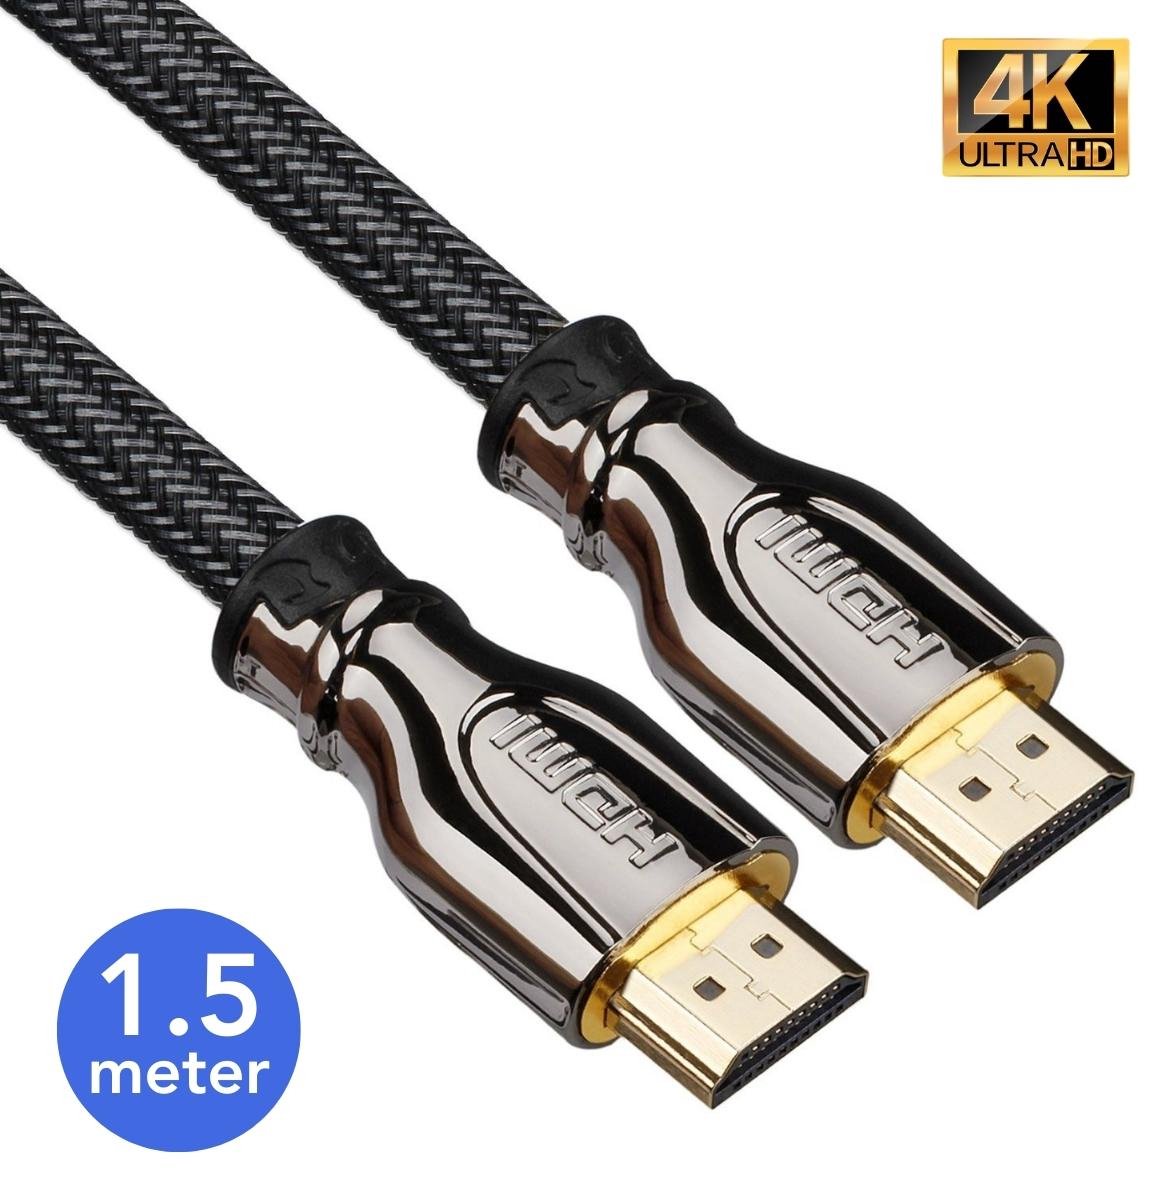 HDMI 2.0 Kabel 1.5 Meter - Ultra HD 4K High Speed (60/120/240Hz) - Vergulde Connectoren - 18GBPS - Premium 3D - TV - PC - PlayStation 4 - Xbox One